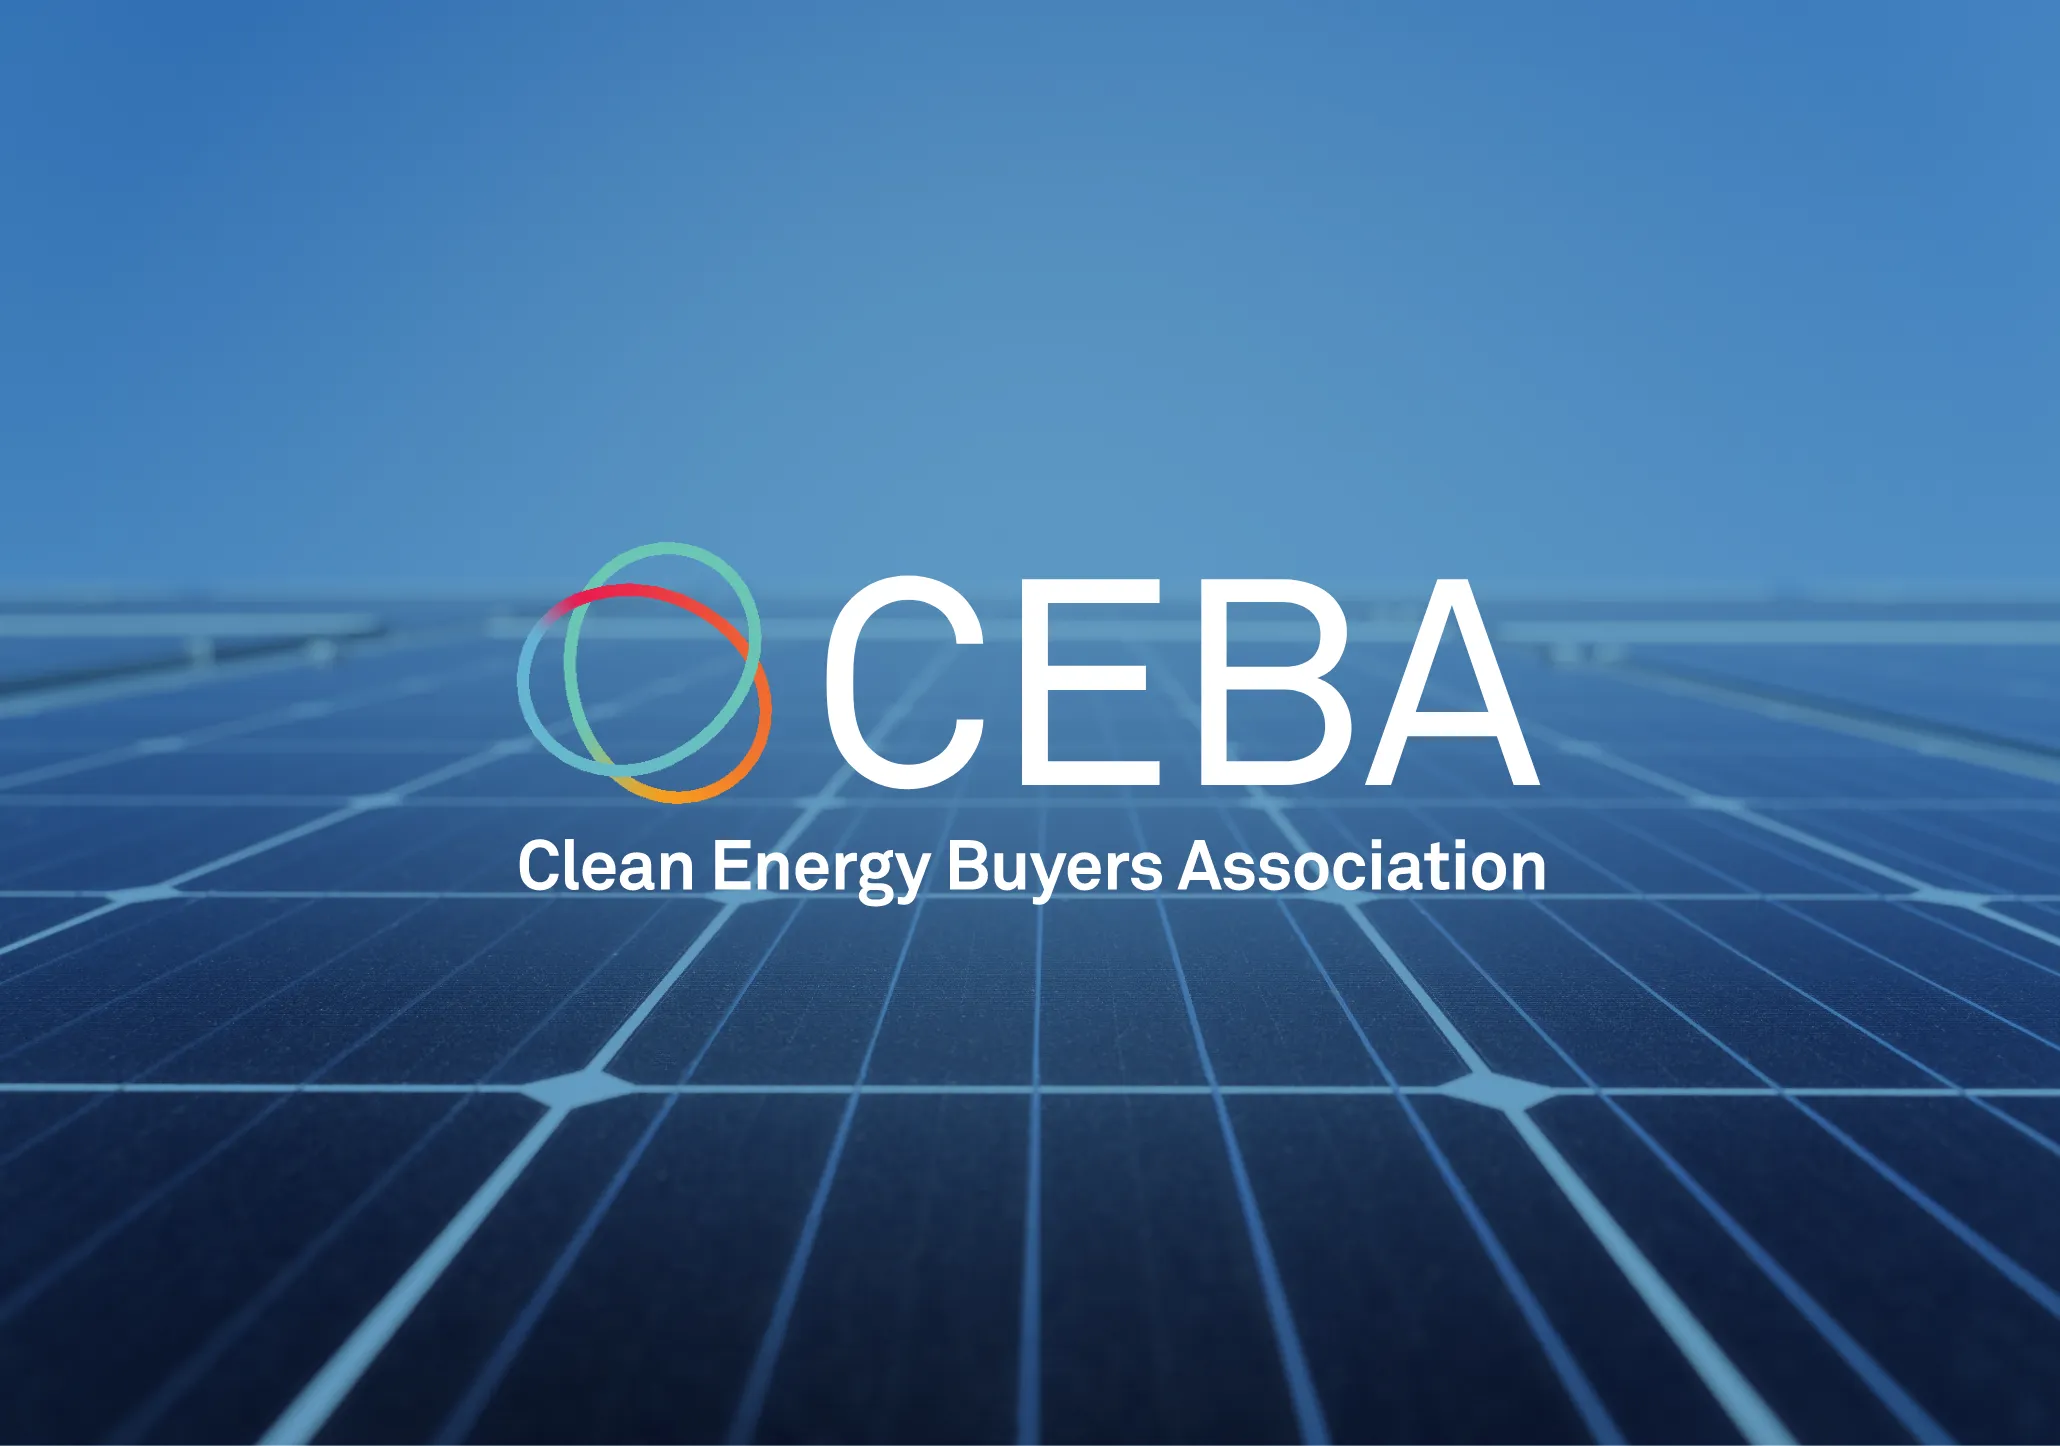 CEBA. Clean Energy Buyers Association.